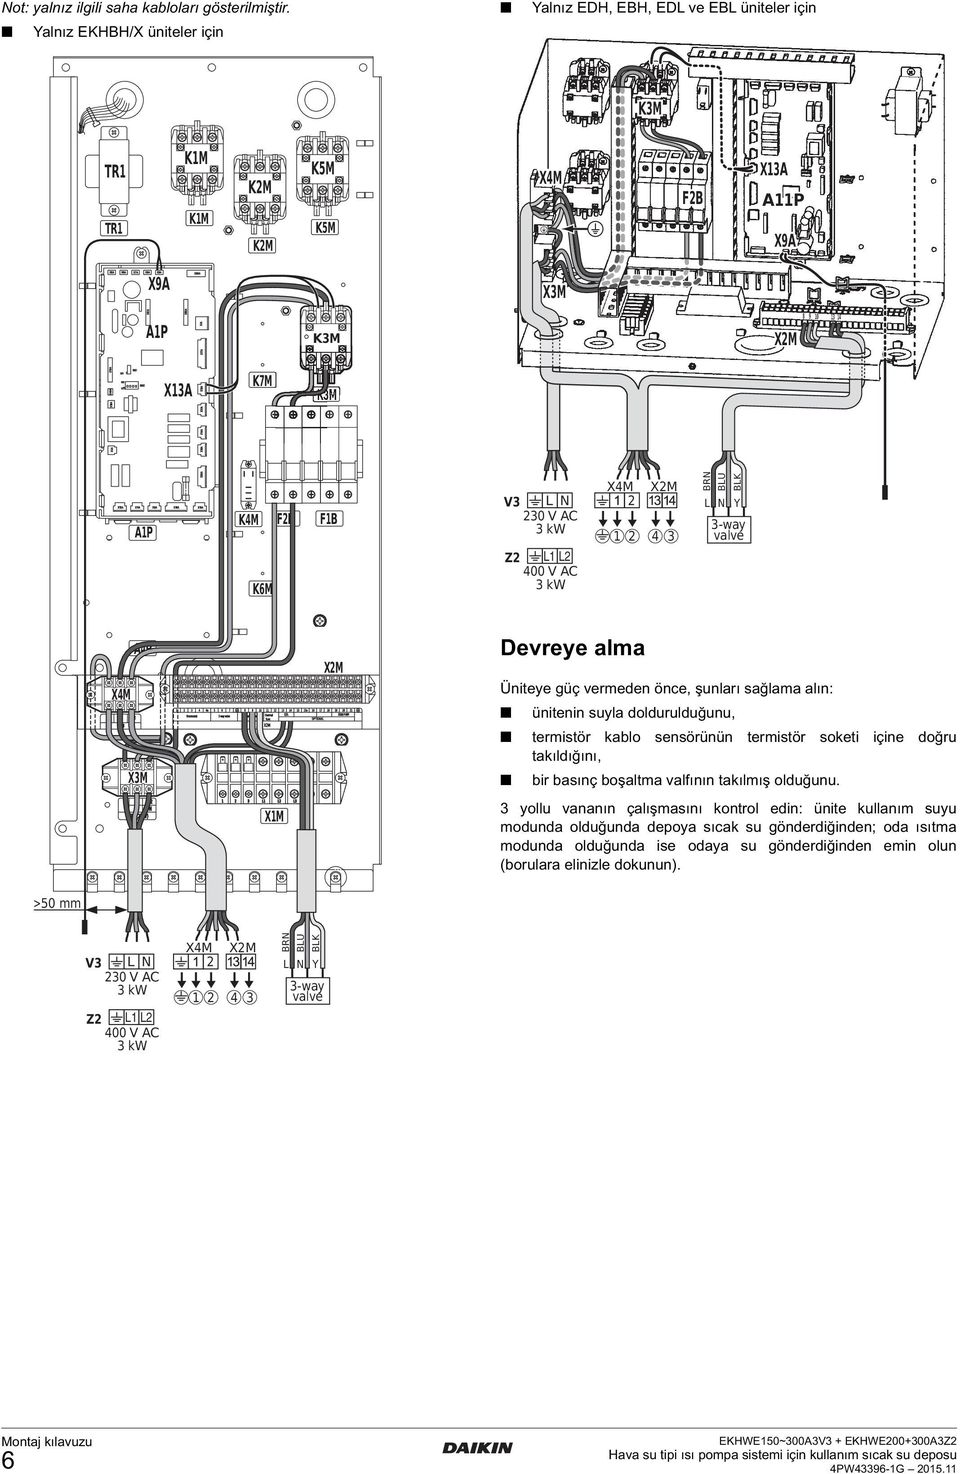 kw X4M XM 4 BRN BLU BLK L N Y -way valve A4P X4M X4M XM L L L N XM (0V) XM 4 4a 5 6 7 8 9 0 4 5 5a 6 7 8 9 0 QL thermostat -way valve -way valve thermal SOLAR PUMP fuse OPTIONAL XM L L L N XM Devreye